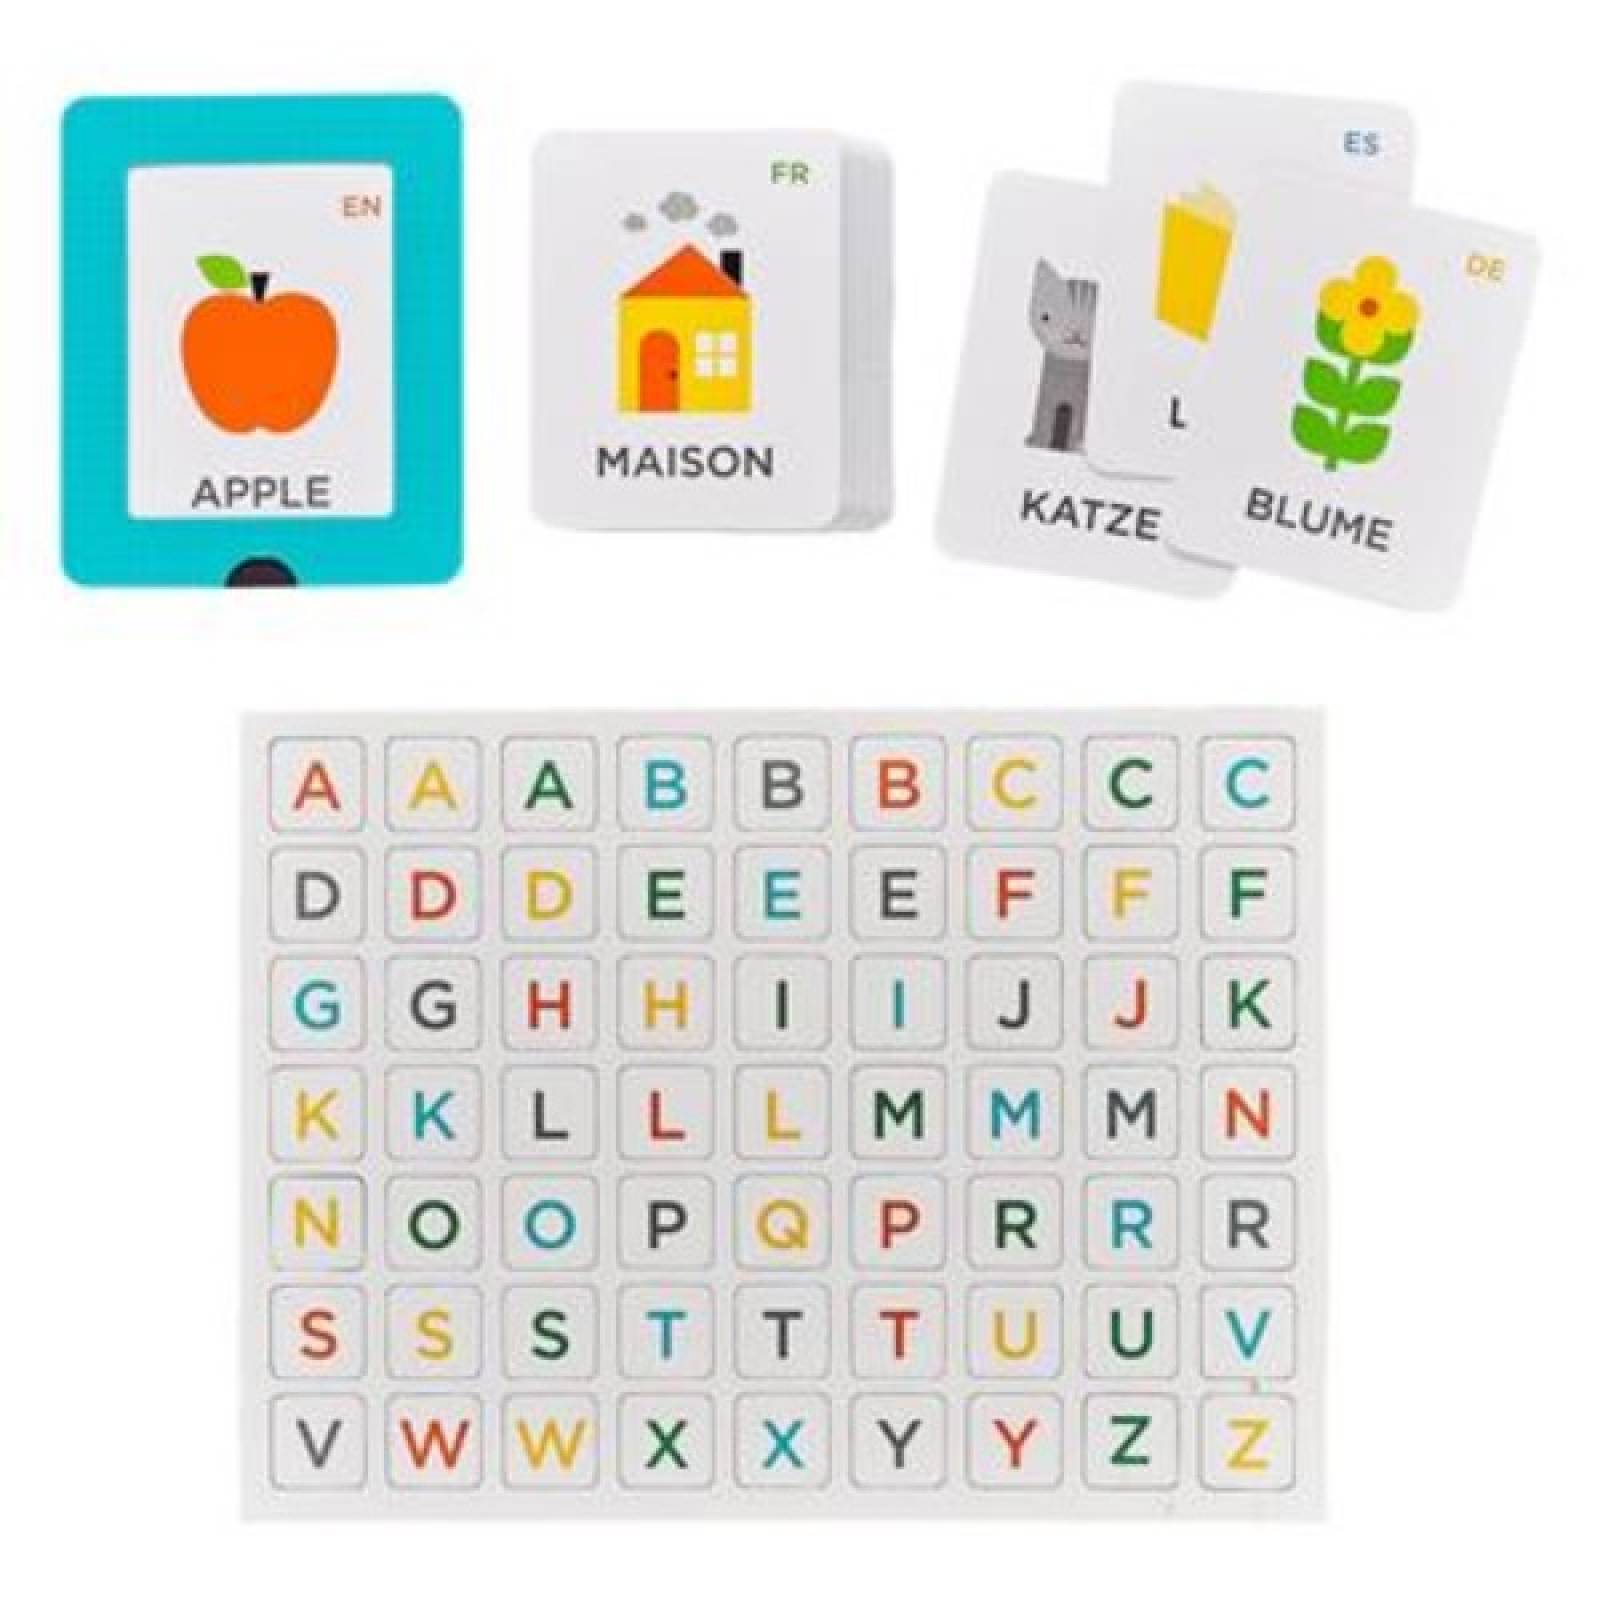 Magnetic Play & Learn Alphabet Set 3+ thumbnails